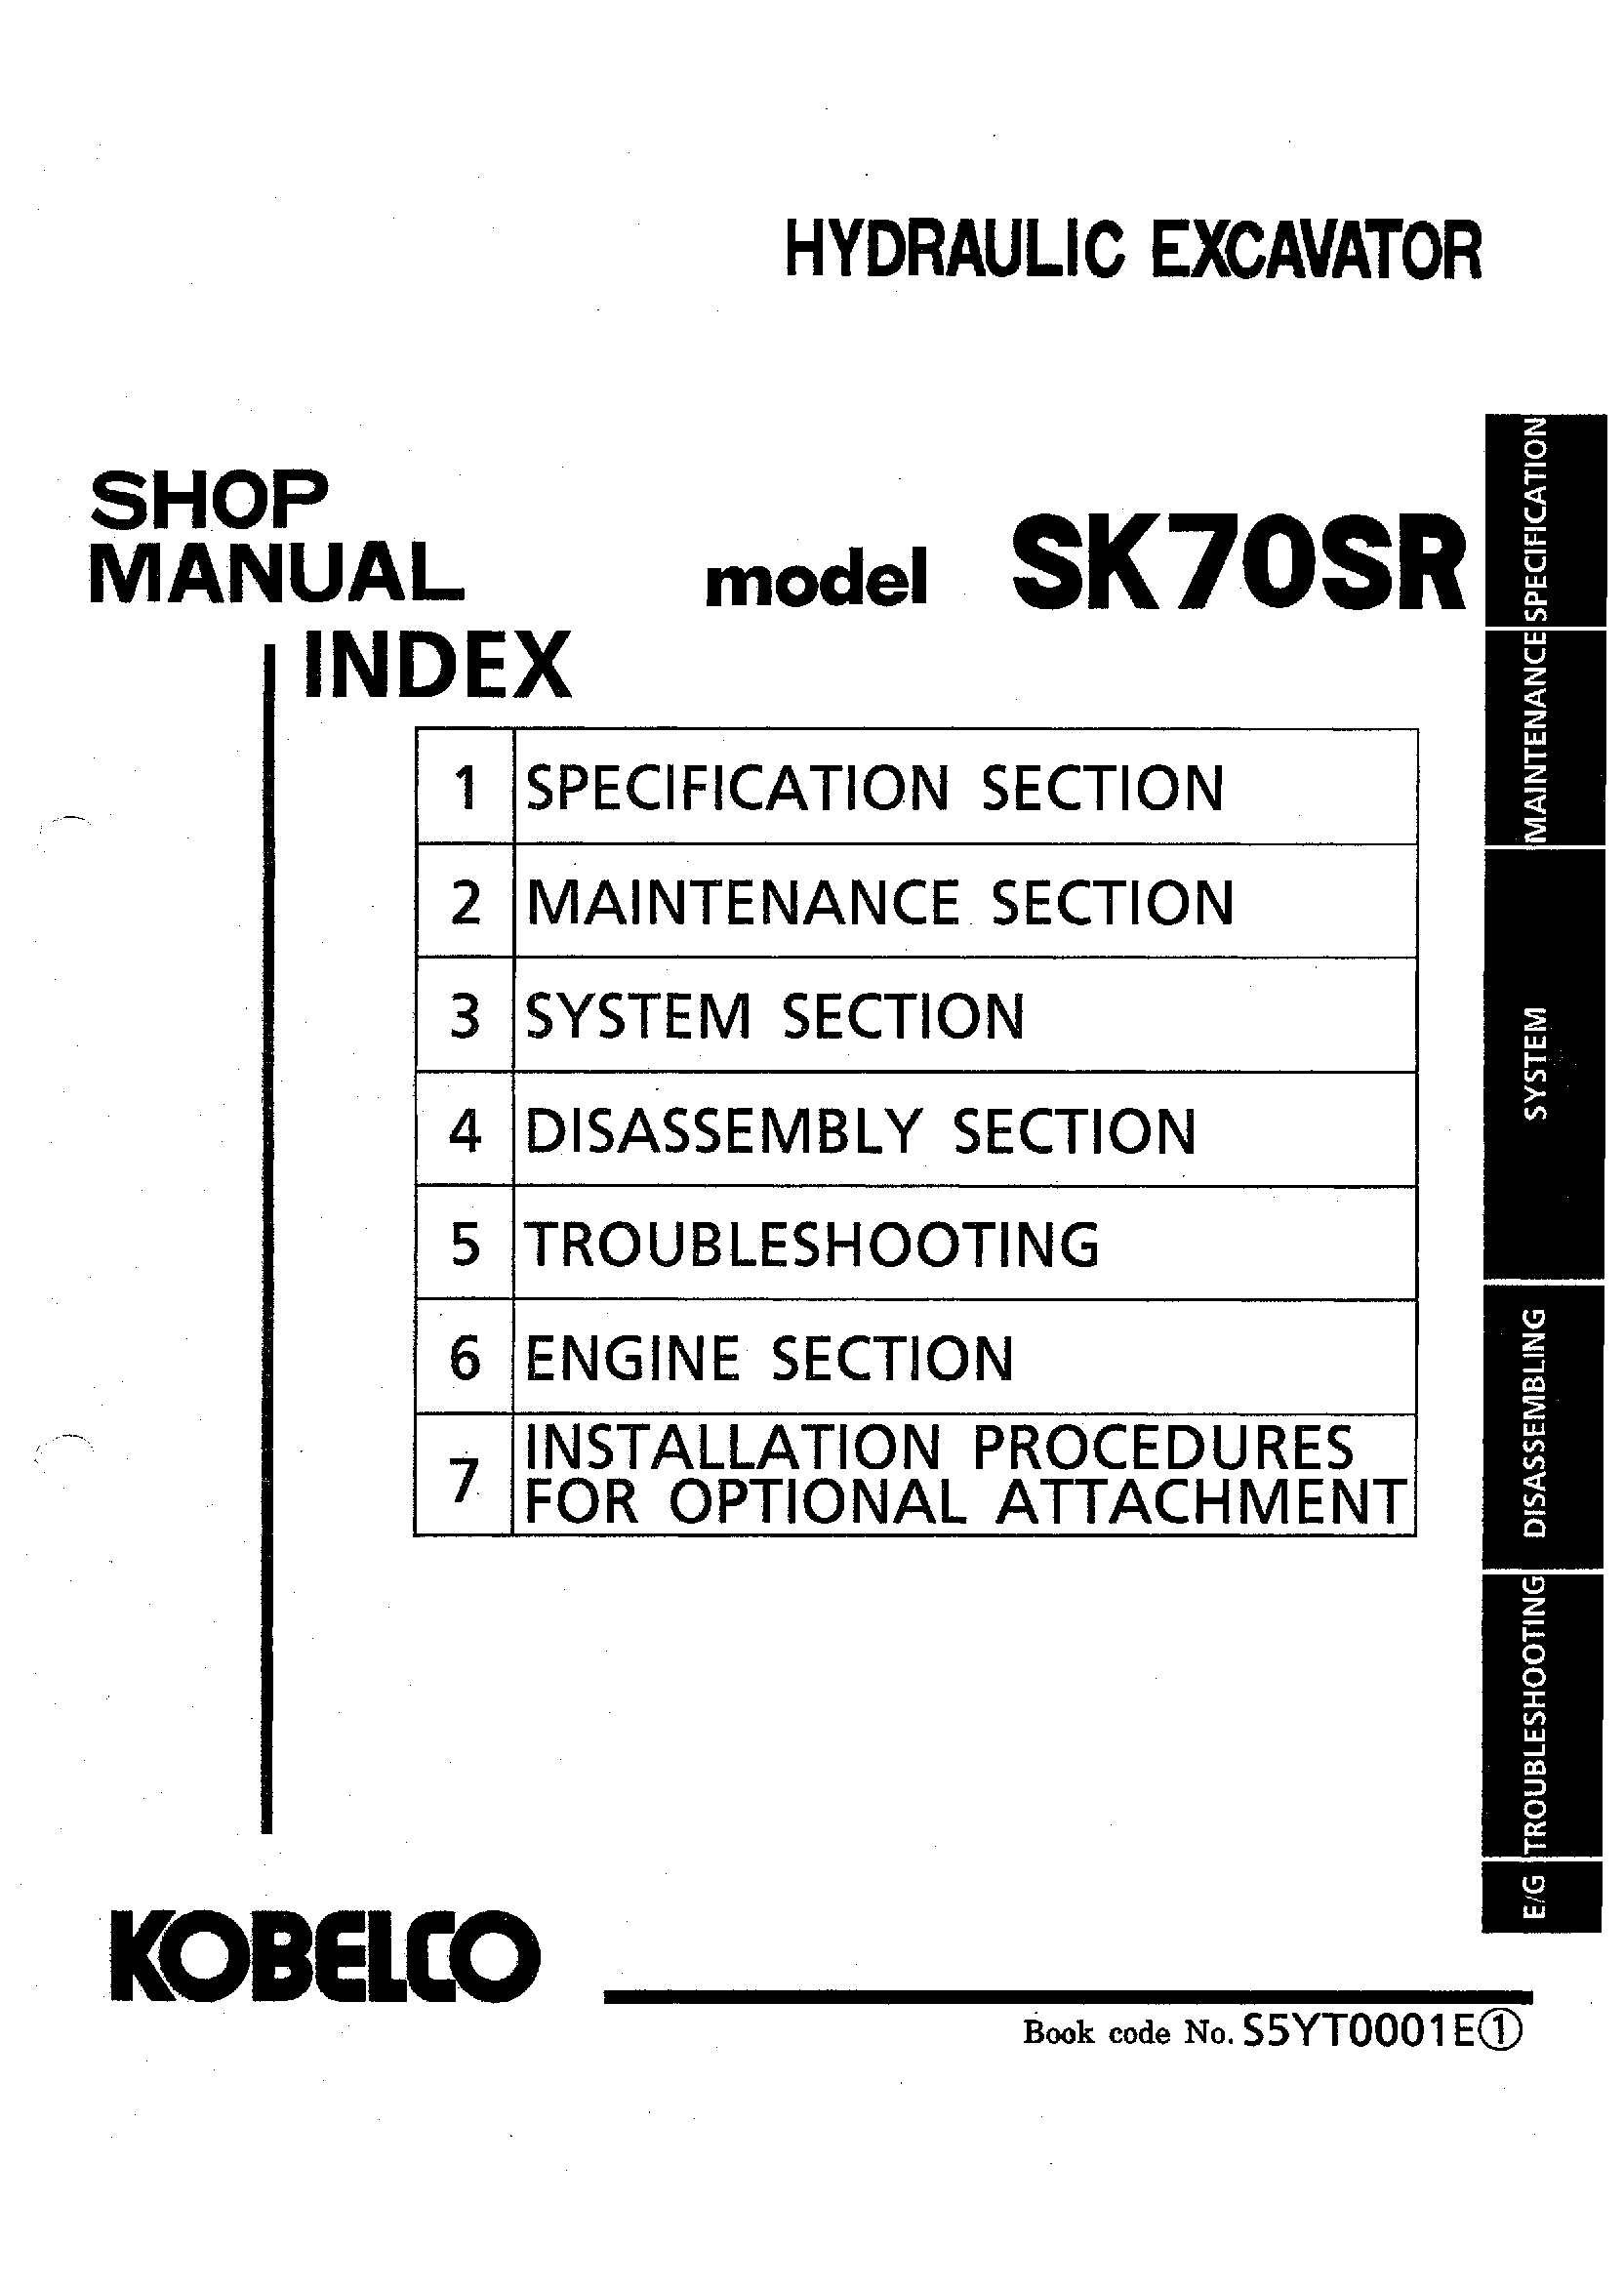 Kobelco SK70SR Hydraulic Excavator Service Manual